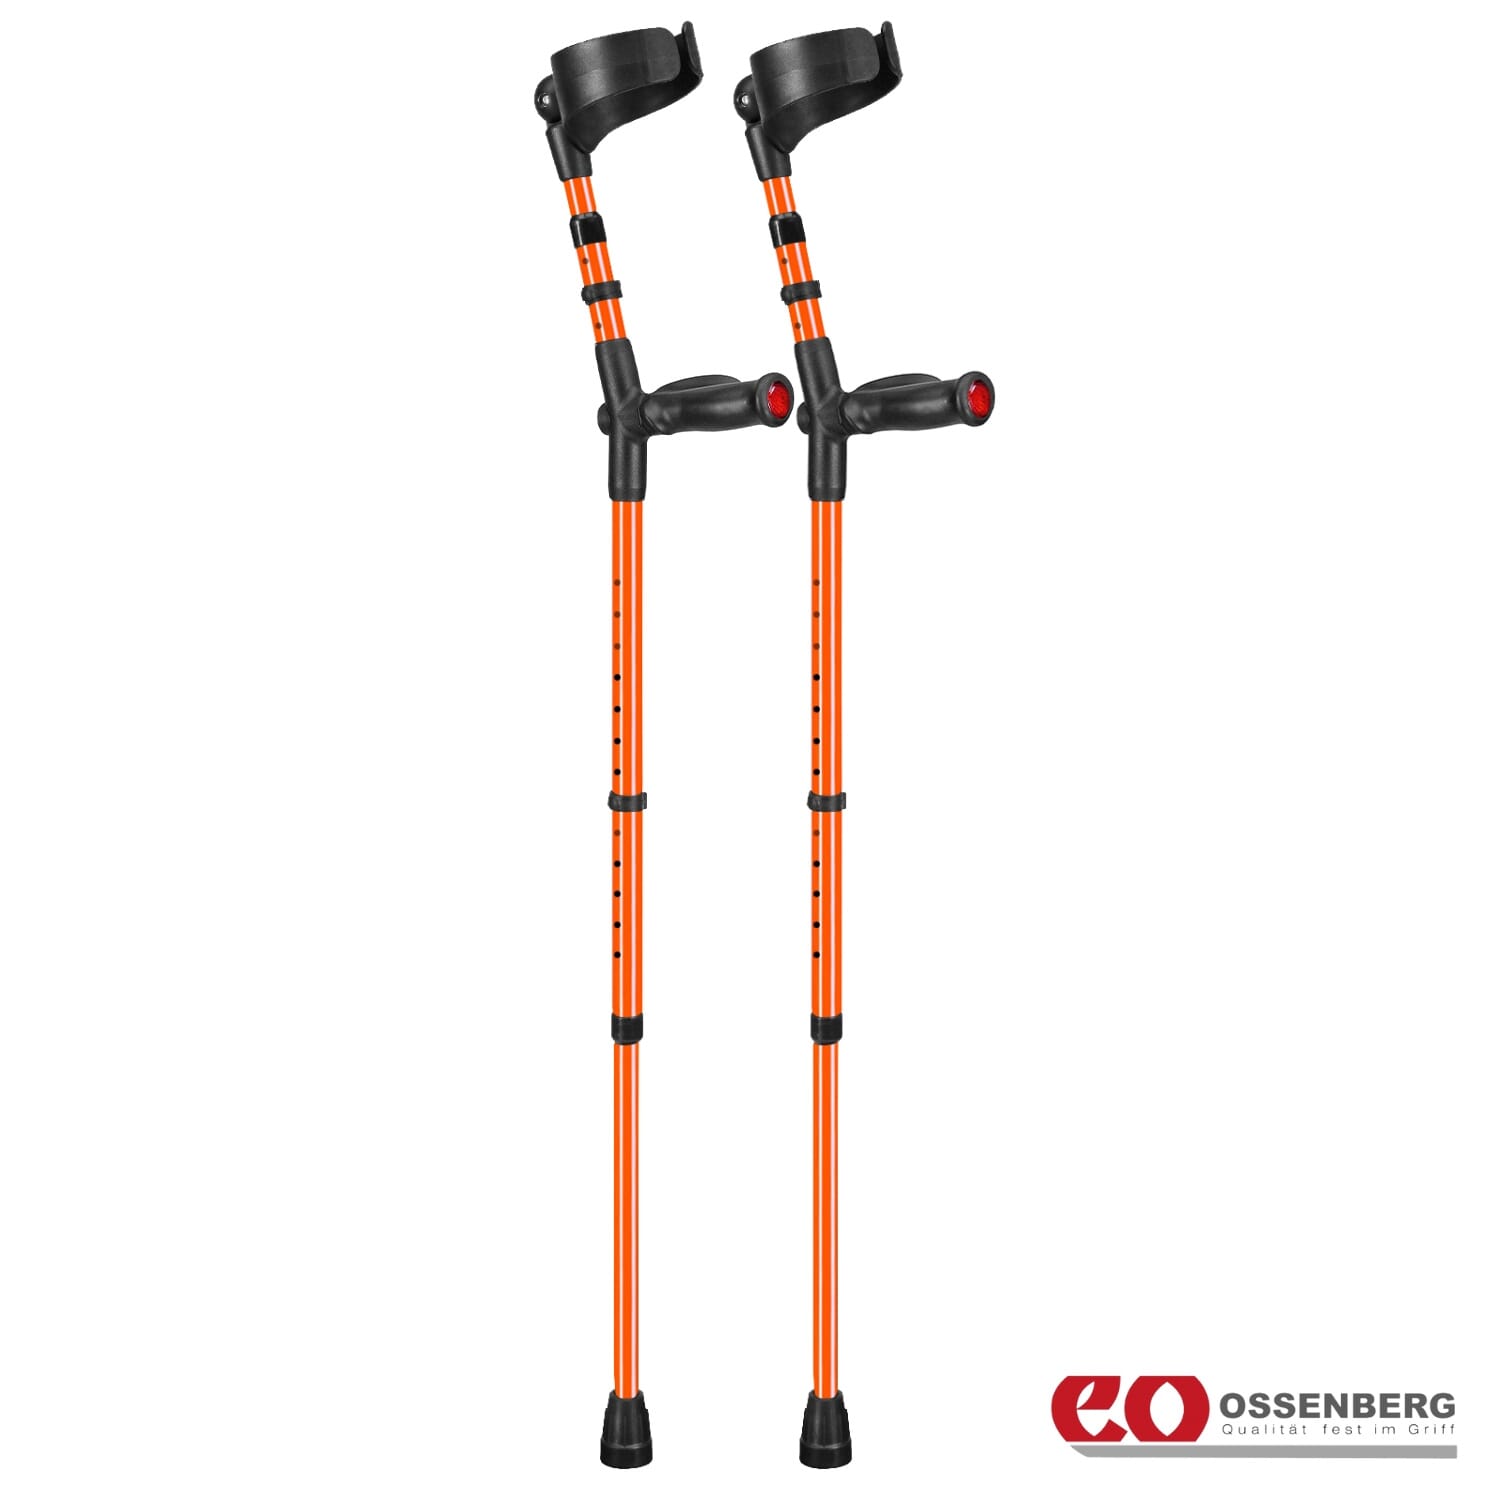 View Ossenberg Comfort Grip Double Adjustable Crutches Orange Pair information